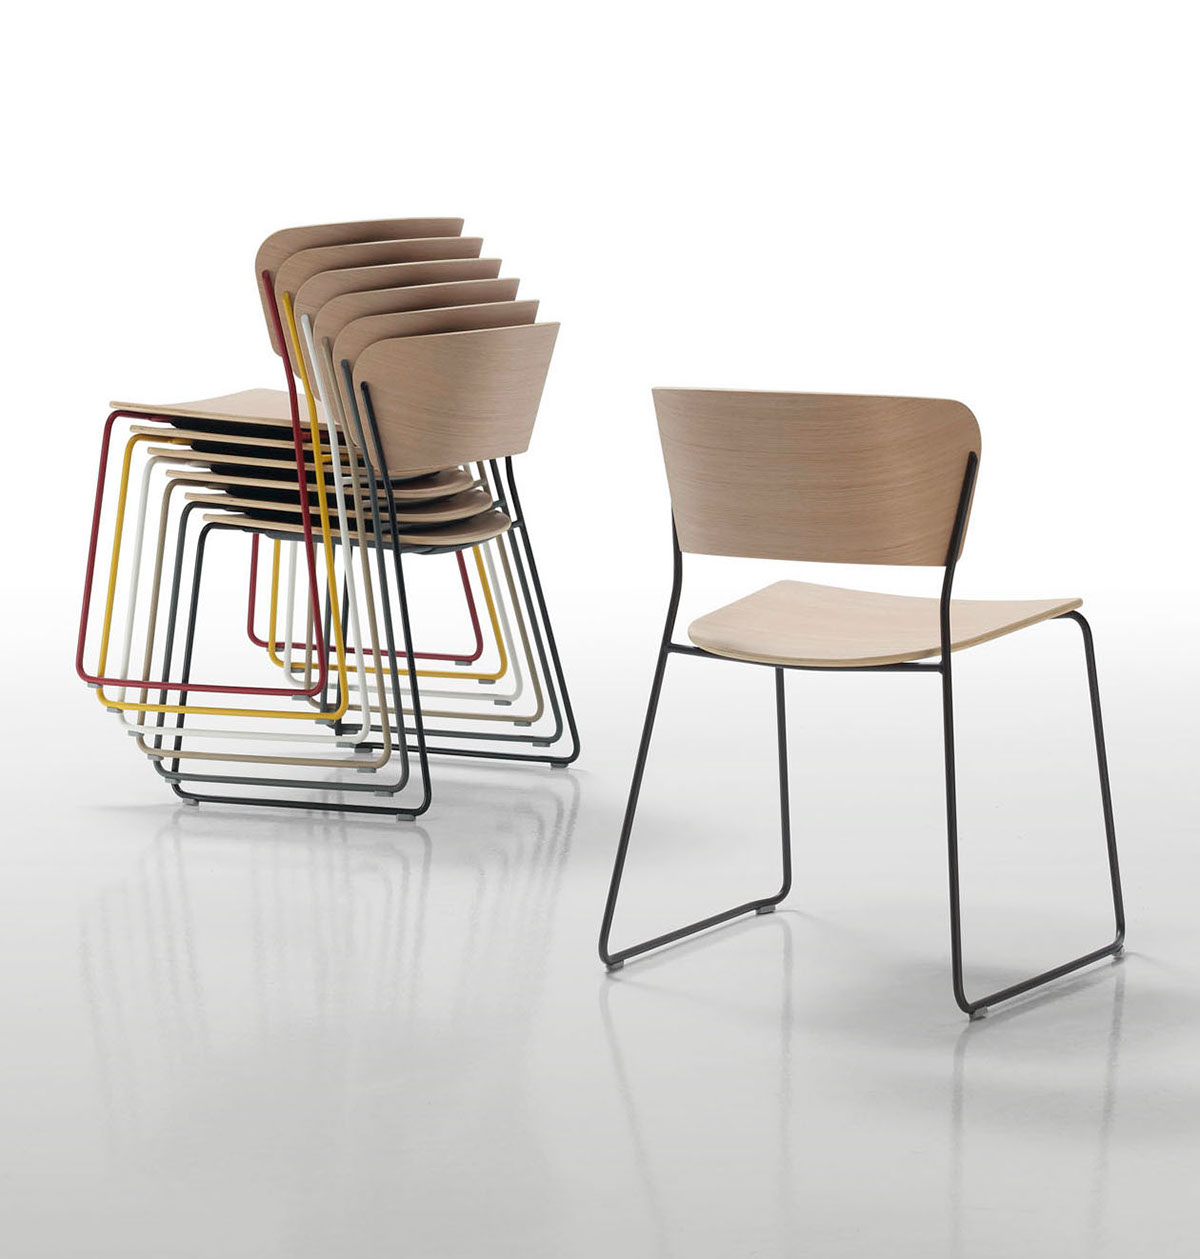 chair design product awarded award inclass yonoh  Interior